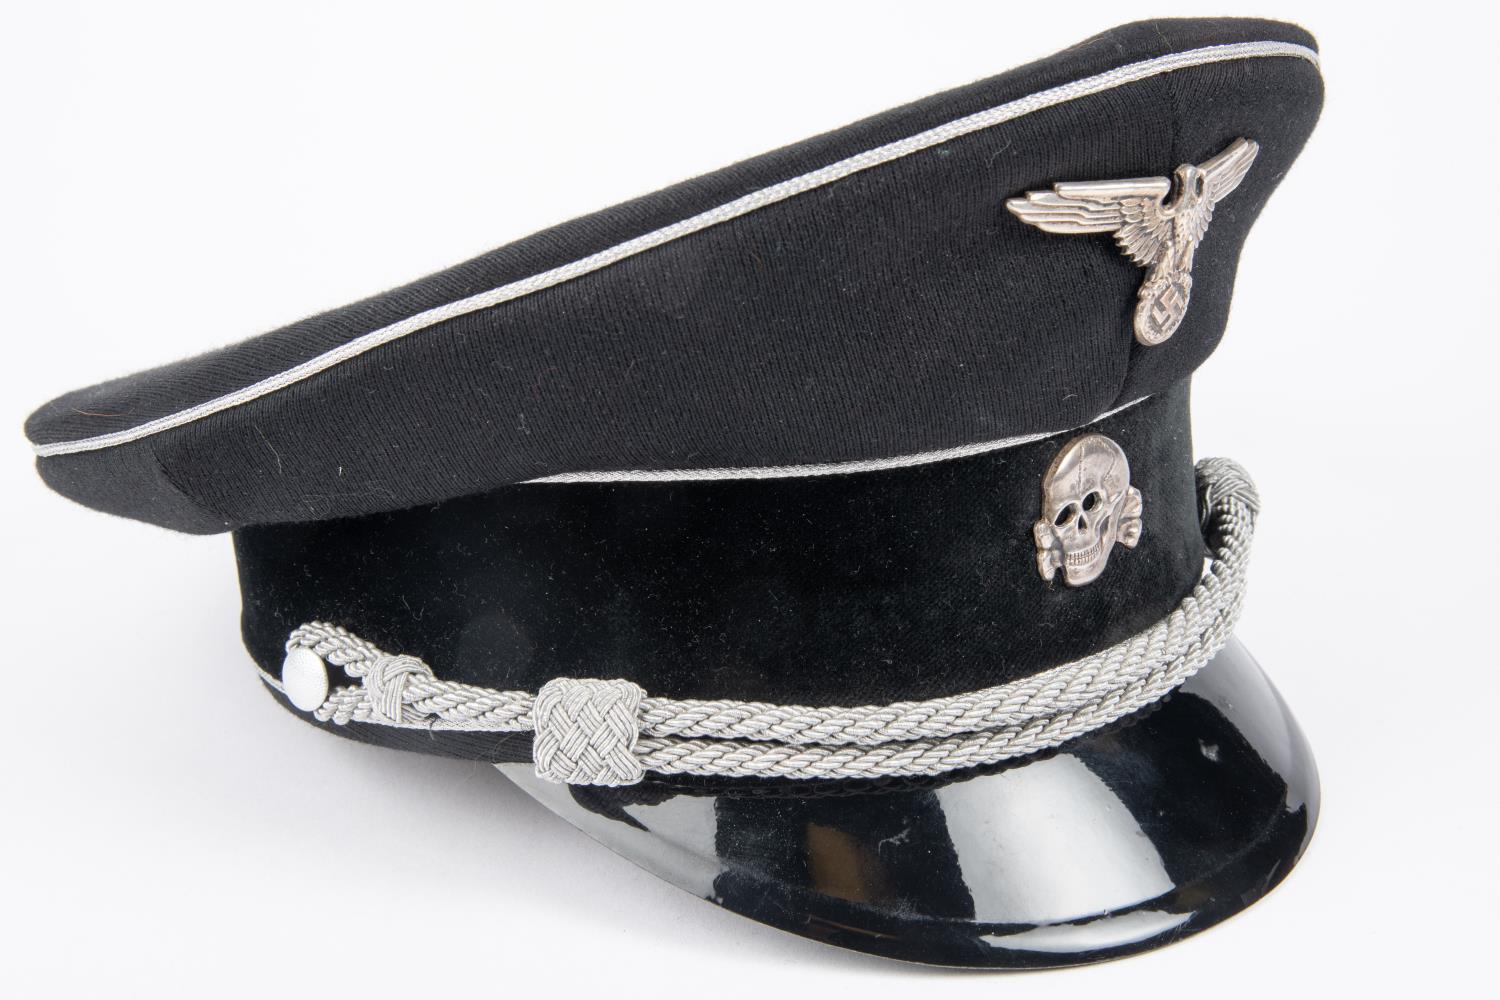 A good copy of a Third Reich Allgemeine SS officer's peaked cap. VGC £100-125